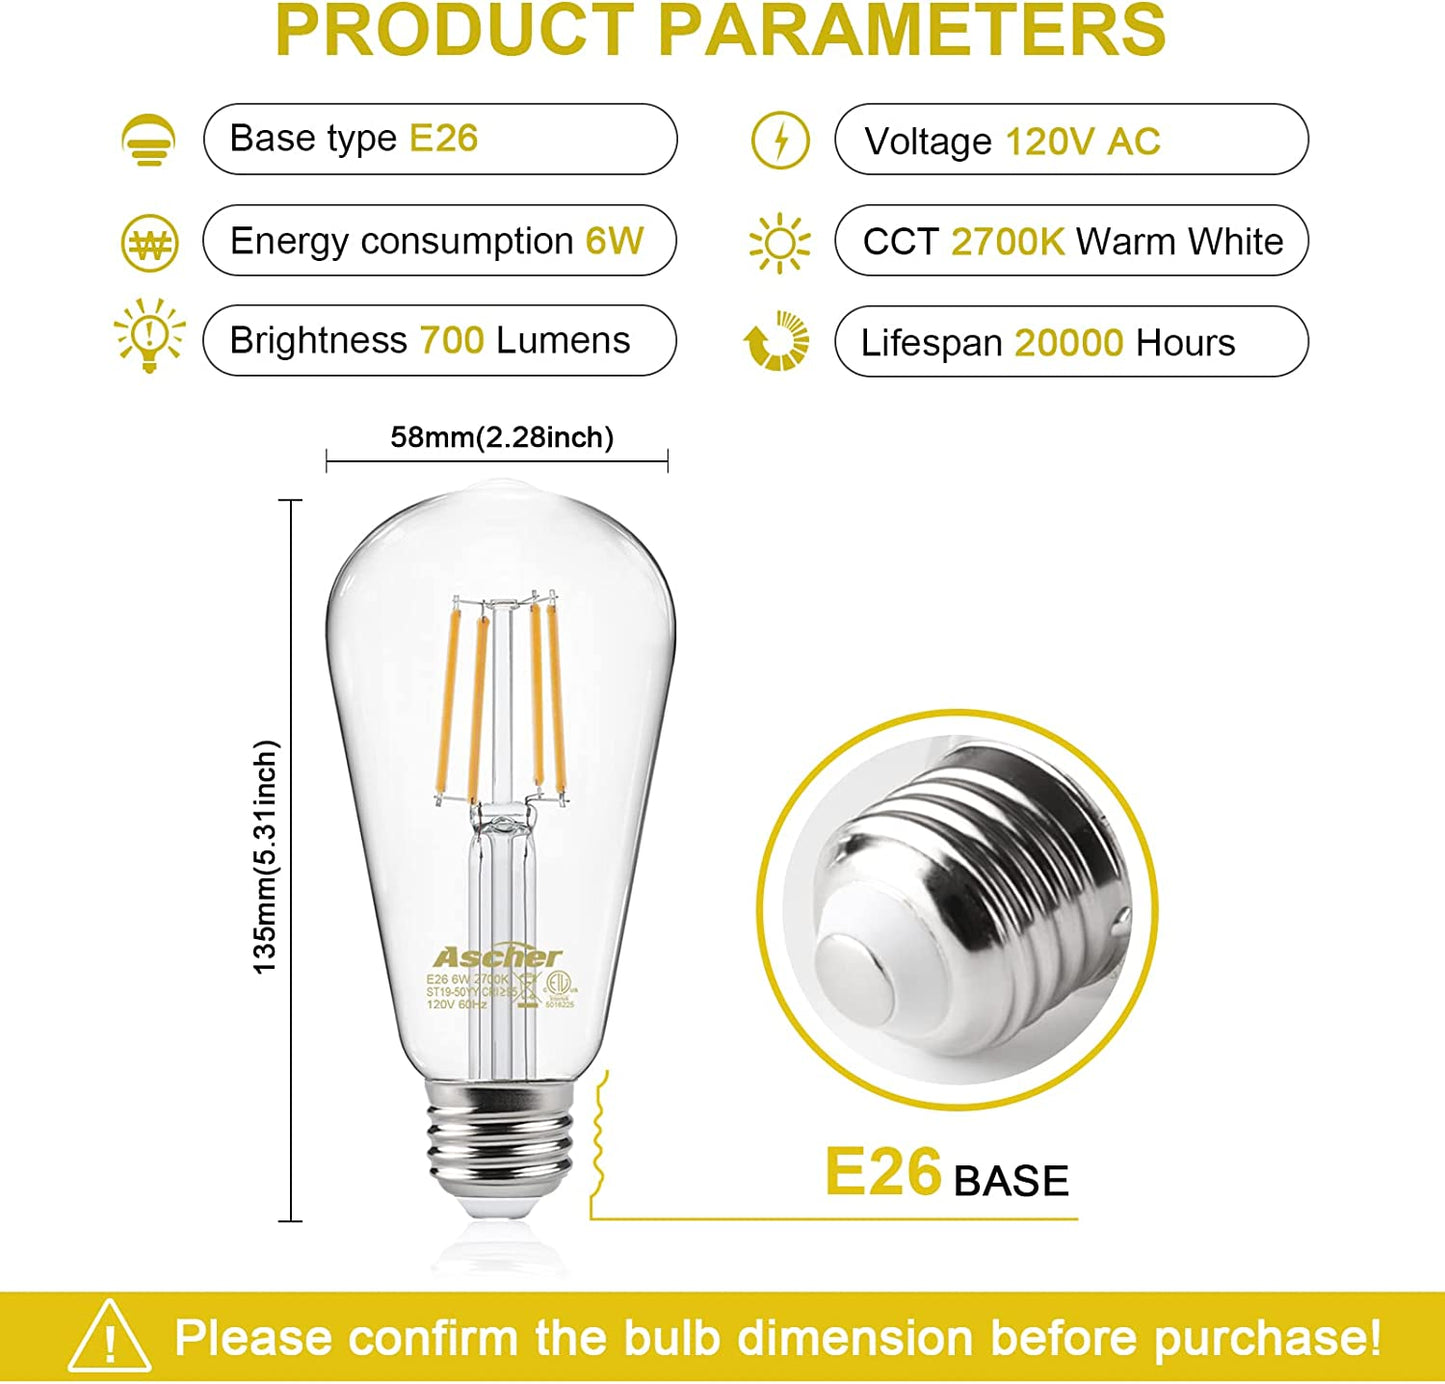 Ascher Dimmable LED Edison Bulbs 60 Watt Equivalent, Eye Protection Led Bulb with 95+ CRI, Warm White 2700K, ST58 Vintage LED Filament Bulbs, E26 Base, Pack of 6